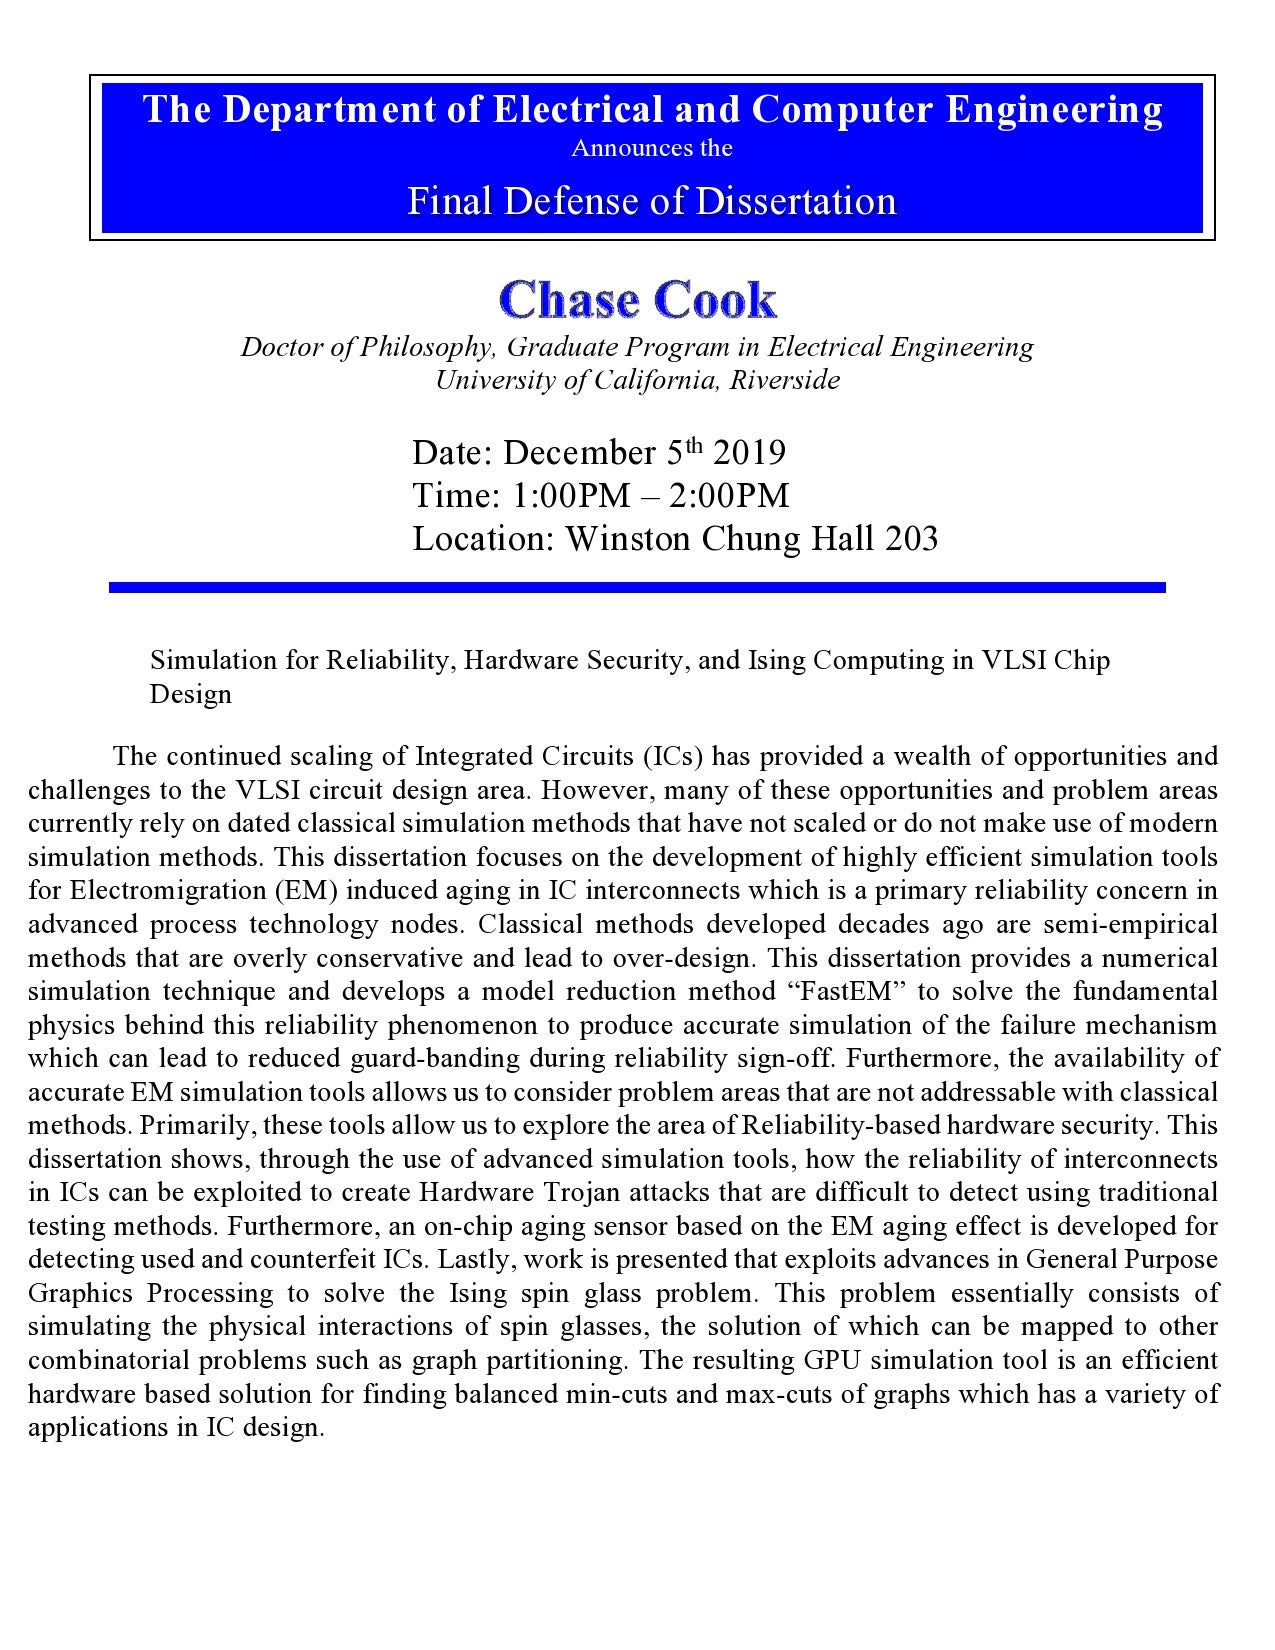 Chase Cook Final Dissertation Flyer